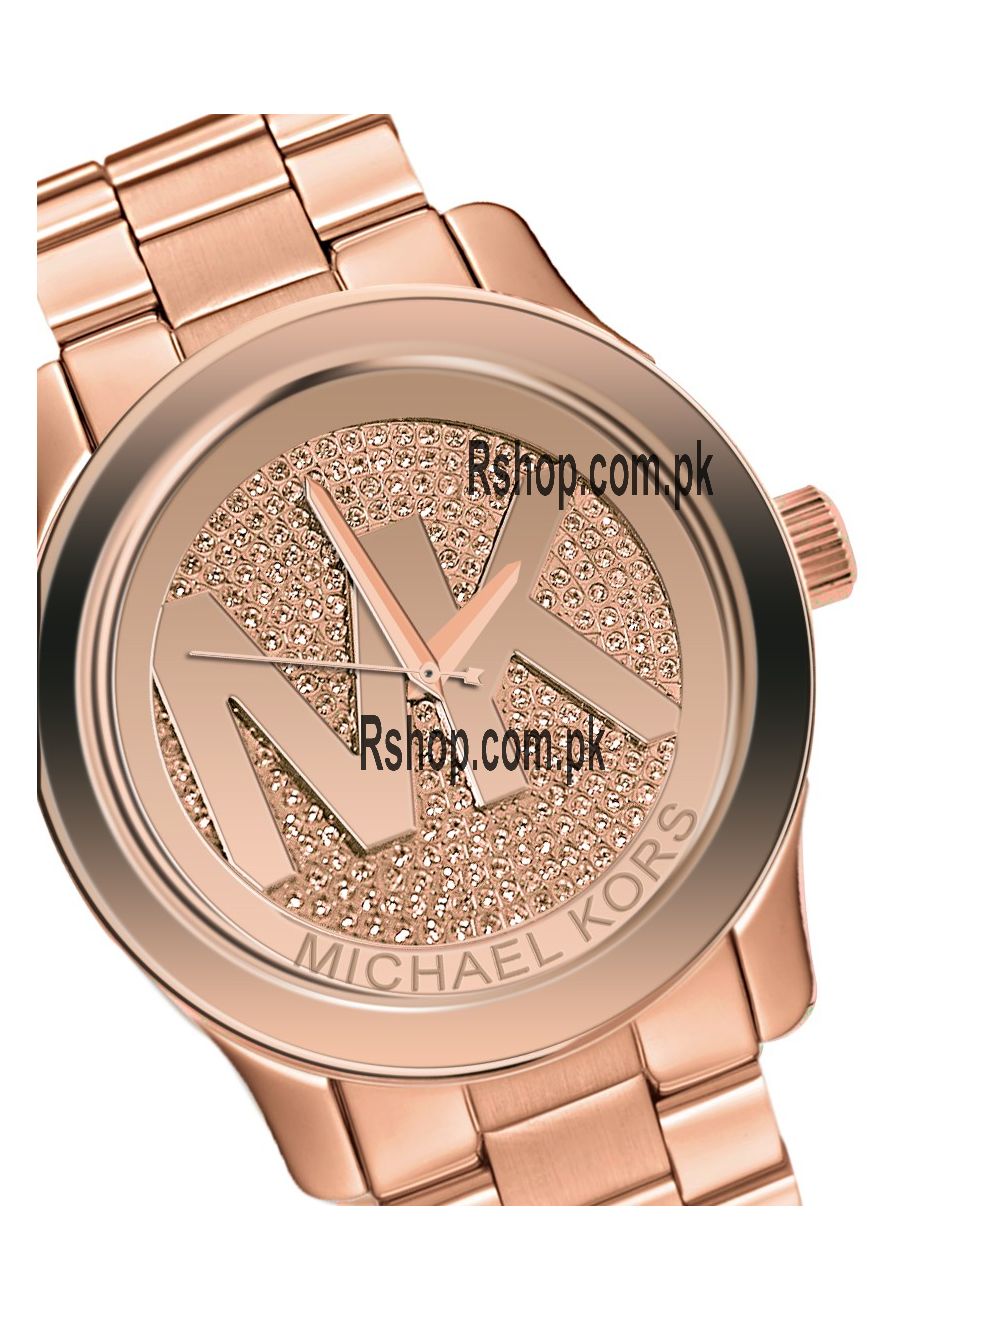 Michael Kors Women's MK5853 'Runway' Rose Gold Tone Stainless Steel Watch